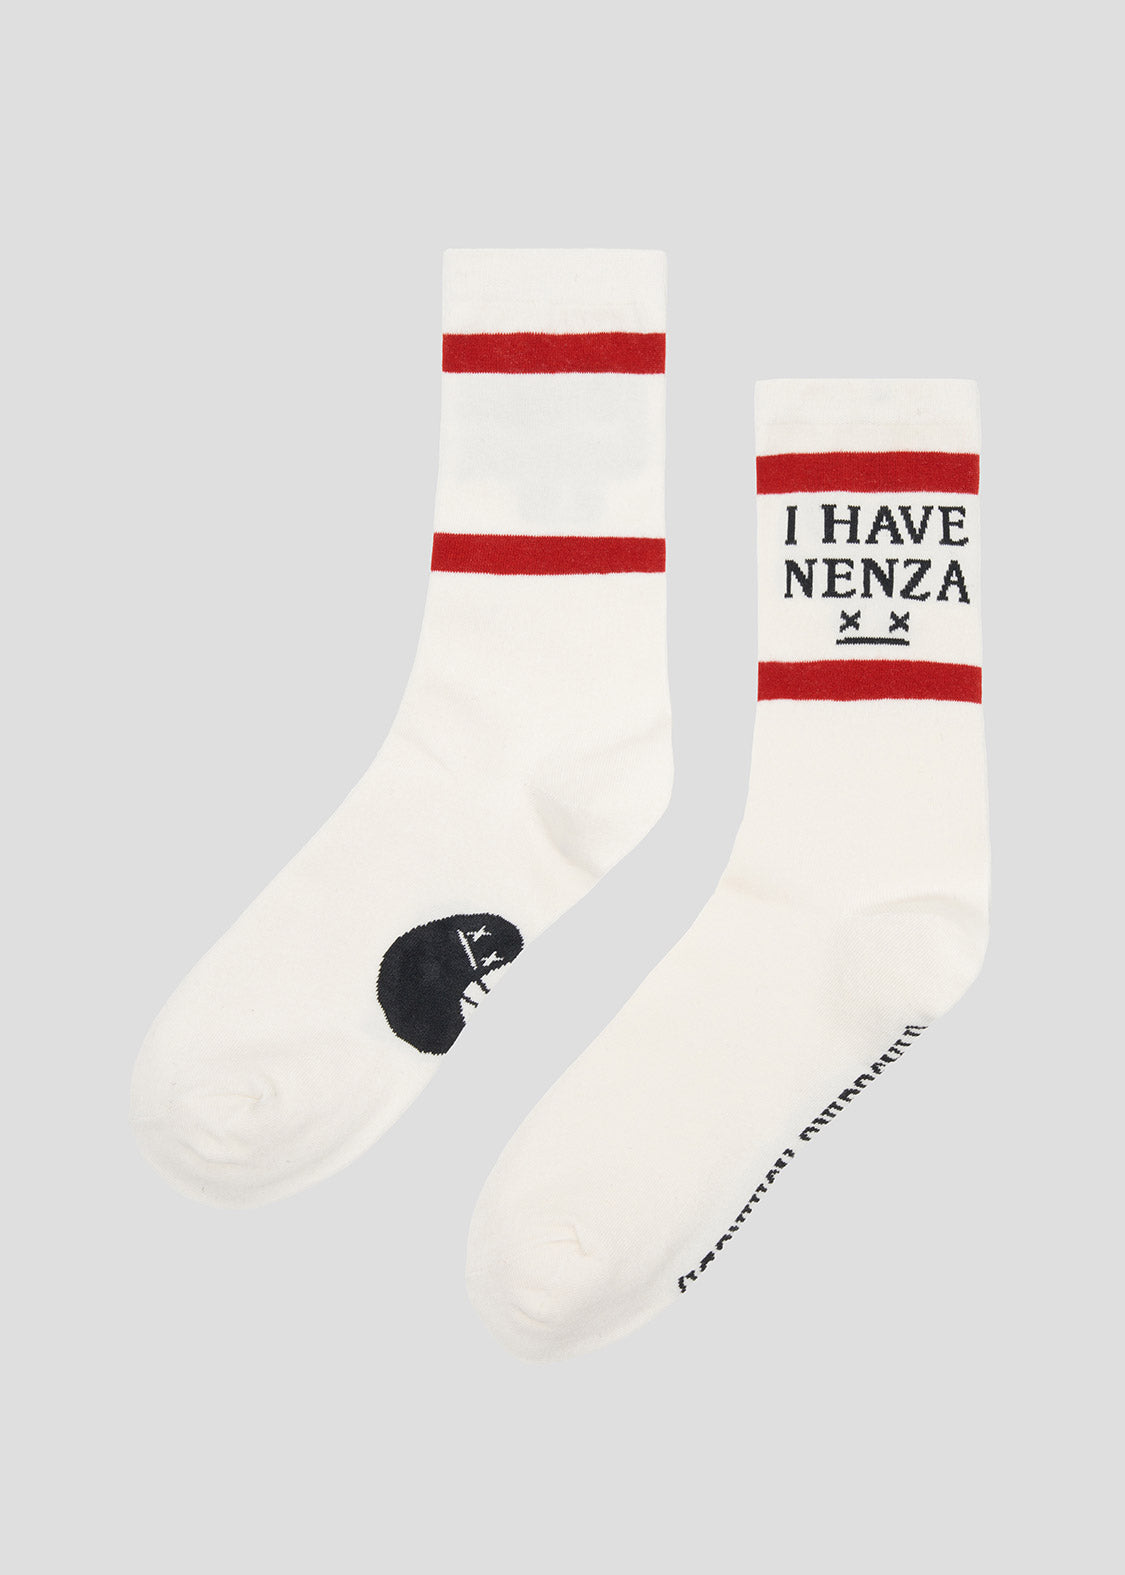 Middle Socks (Nenza Beautiful Shadow)